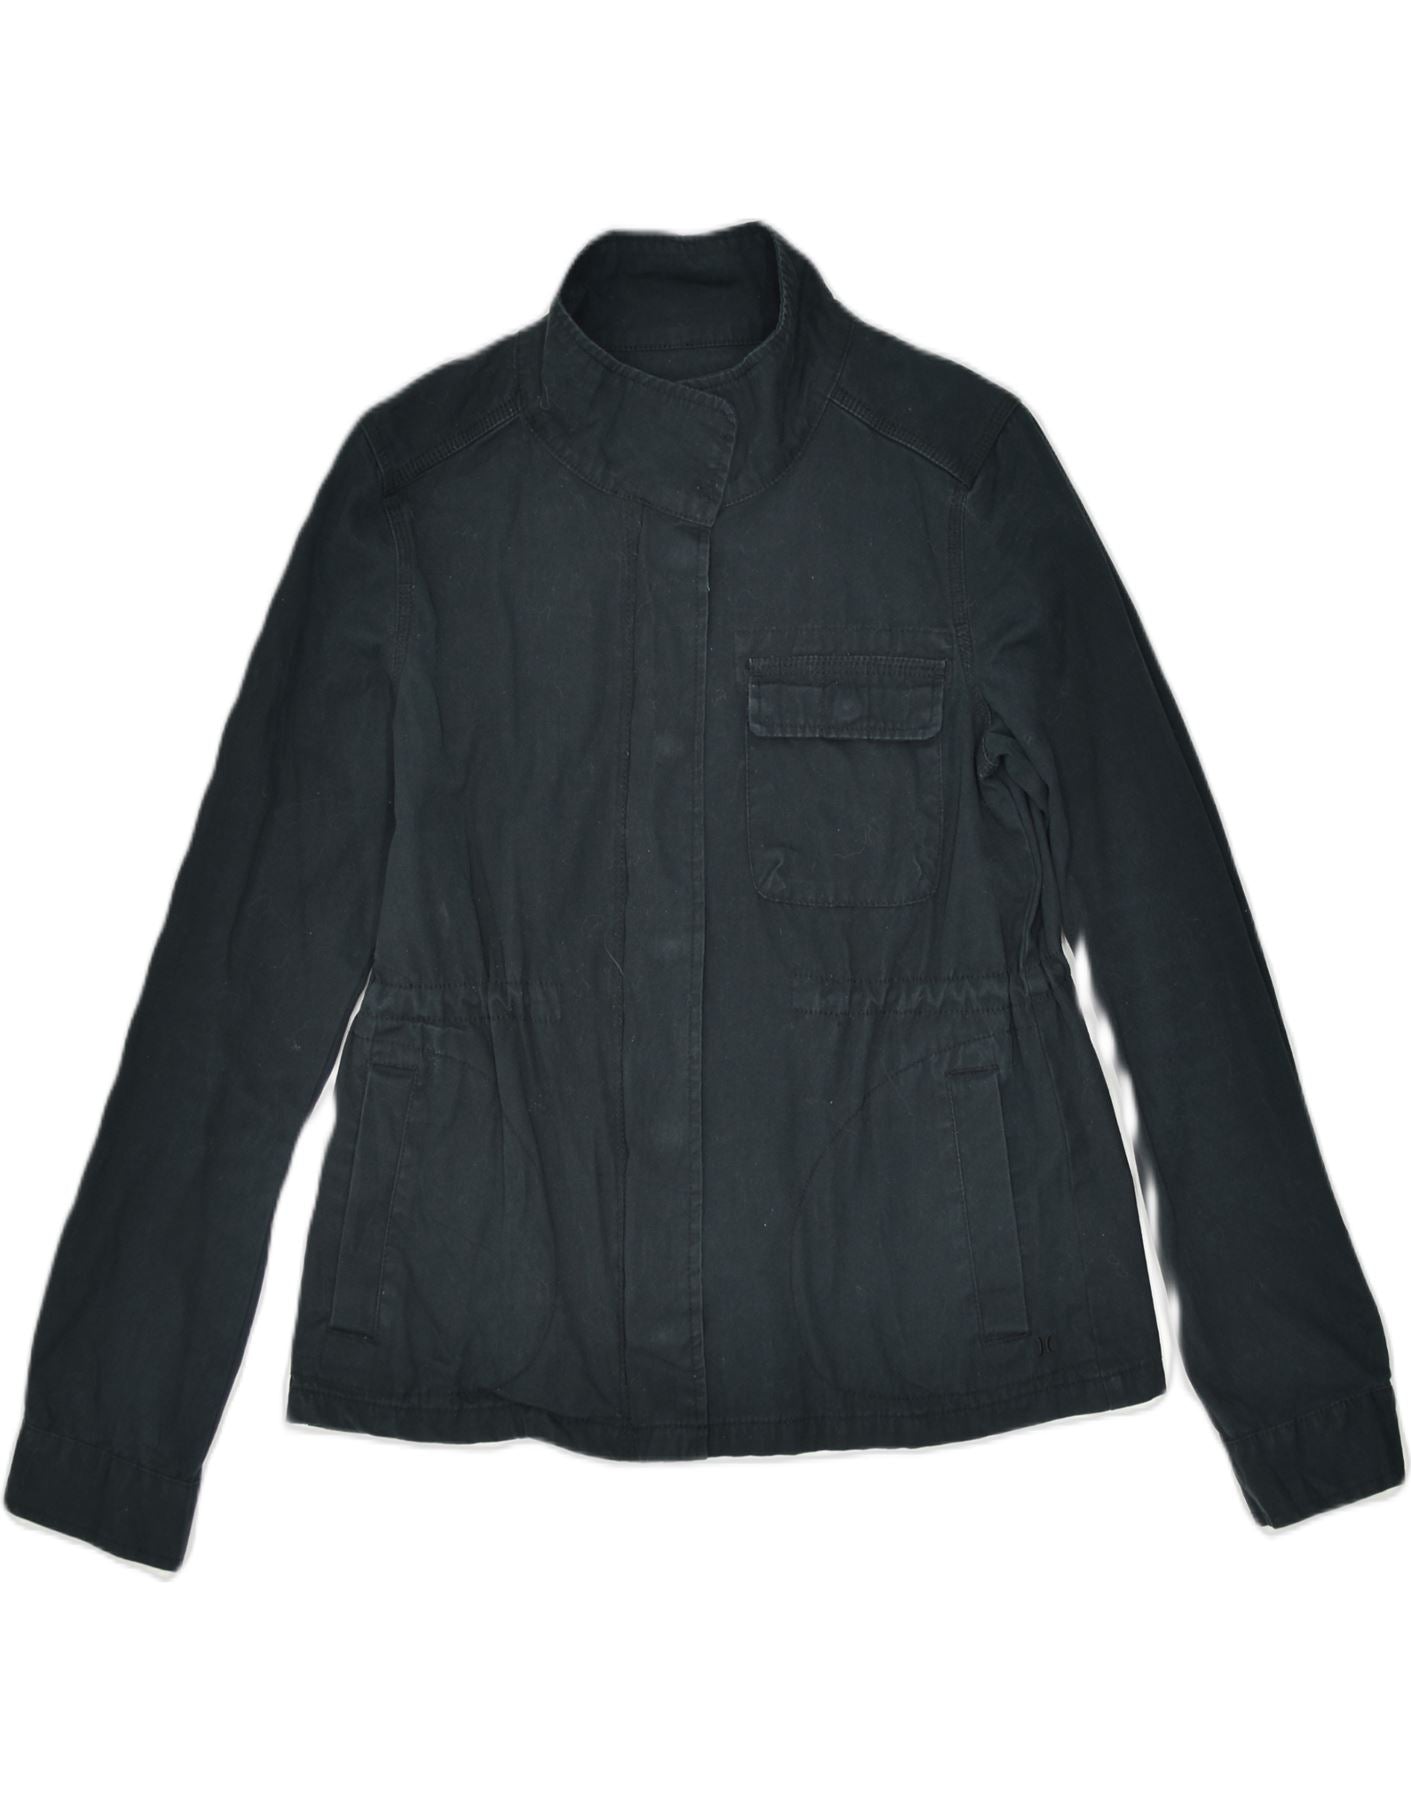 HURLEY Womens Utility Jacket UK 10 Small Black Cotton Classic